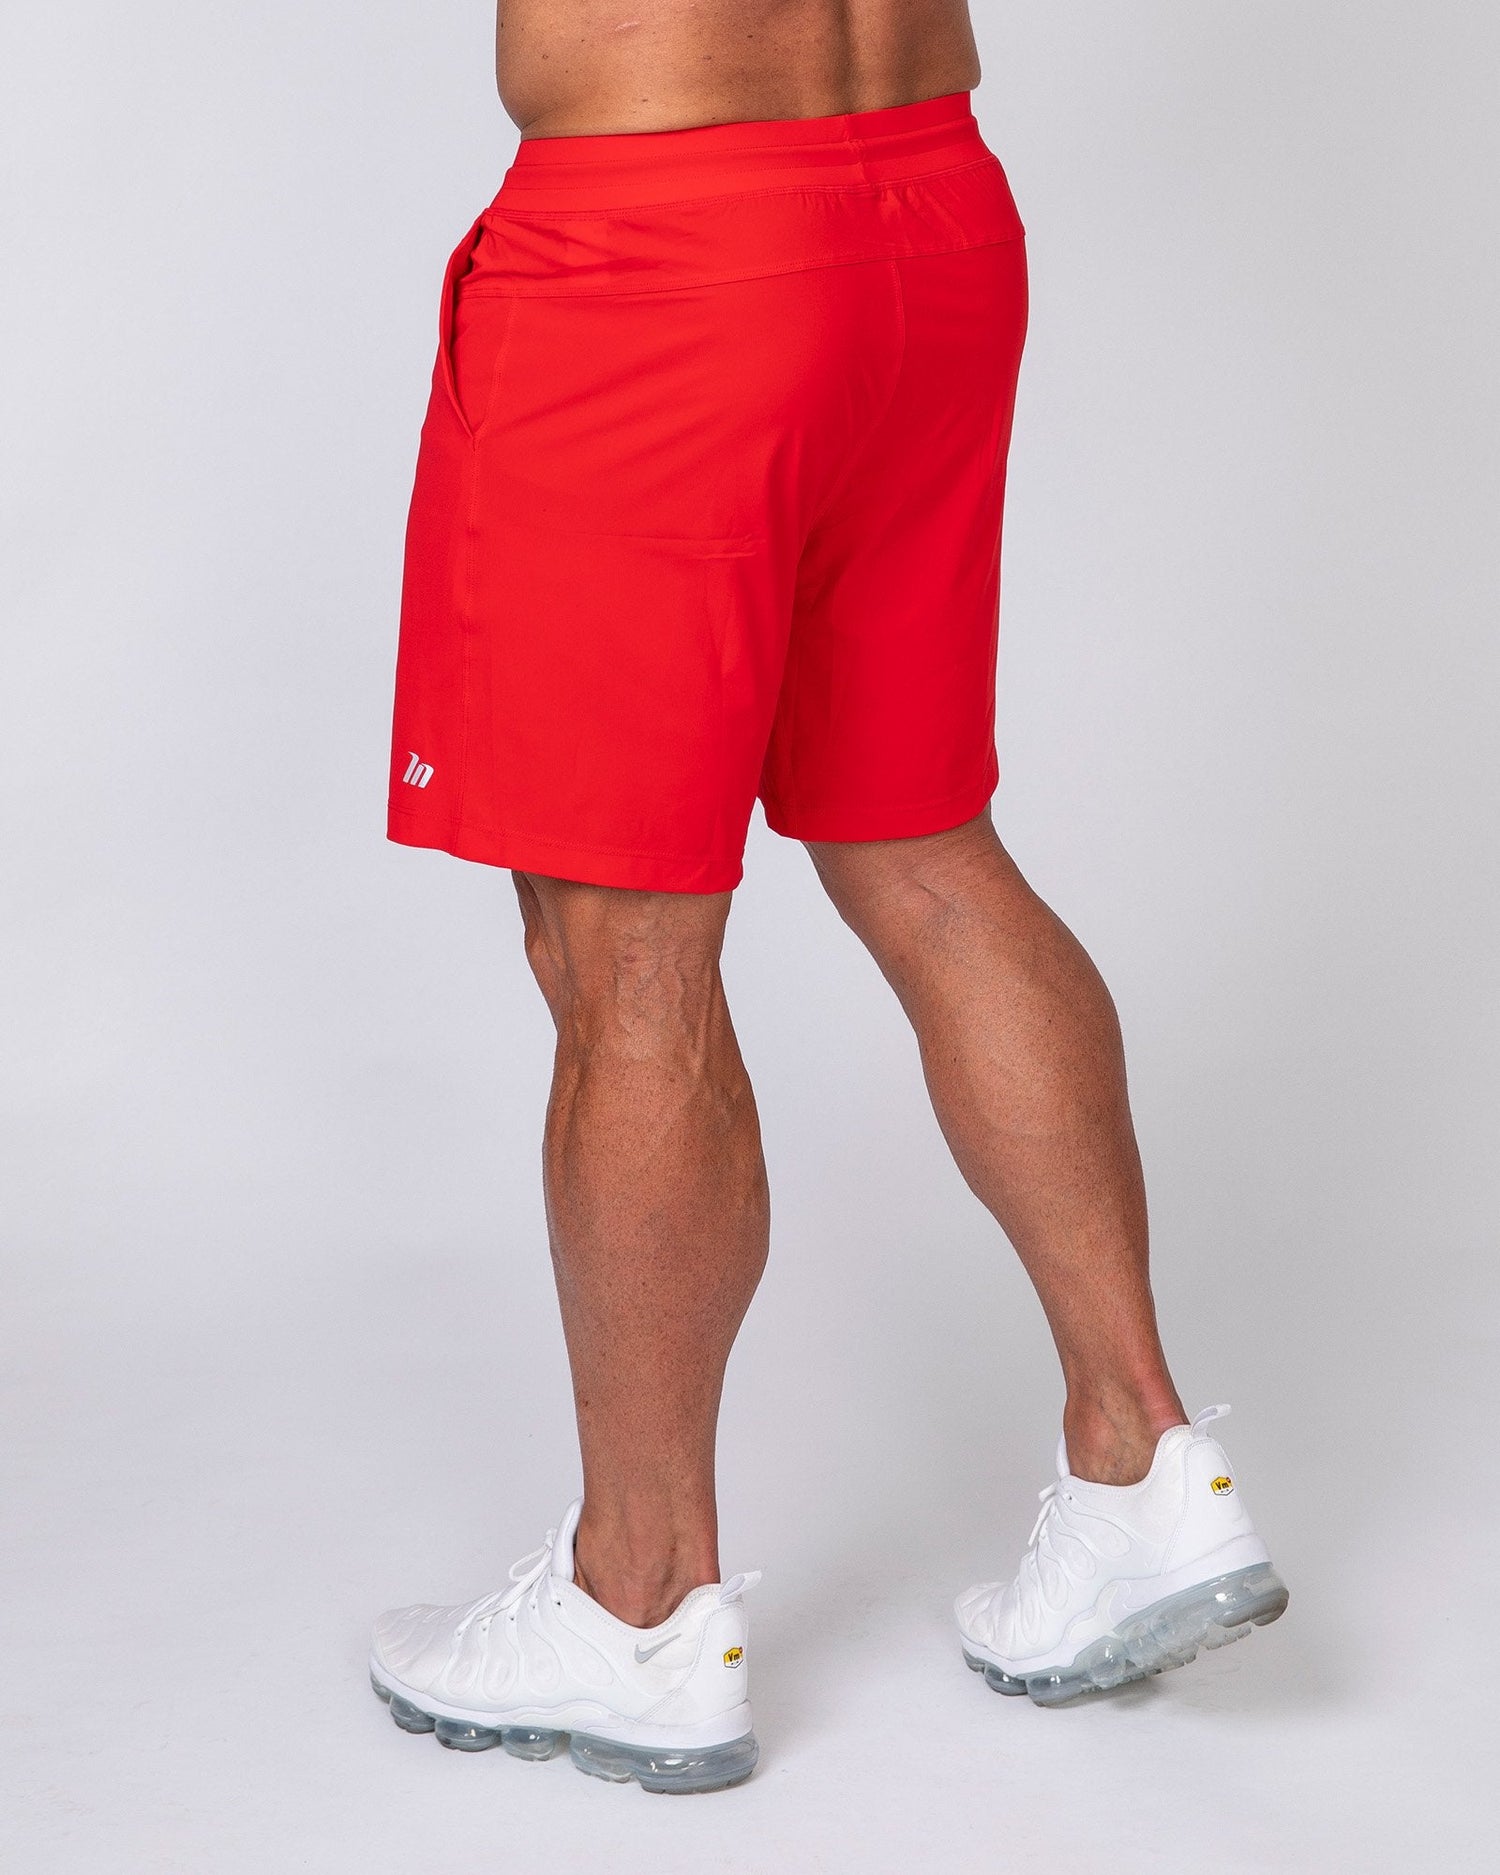 Training Shorts - Red